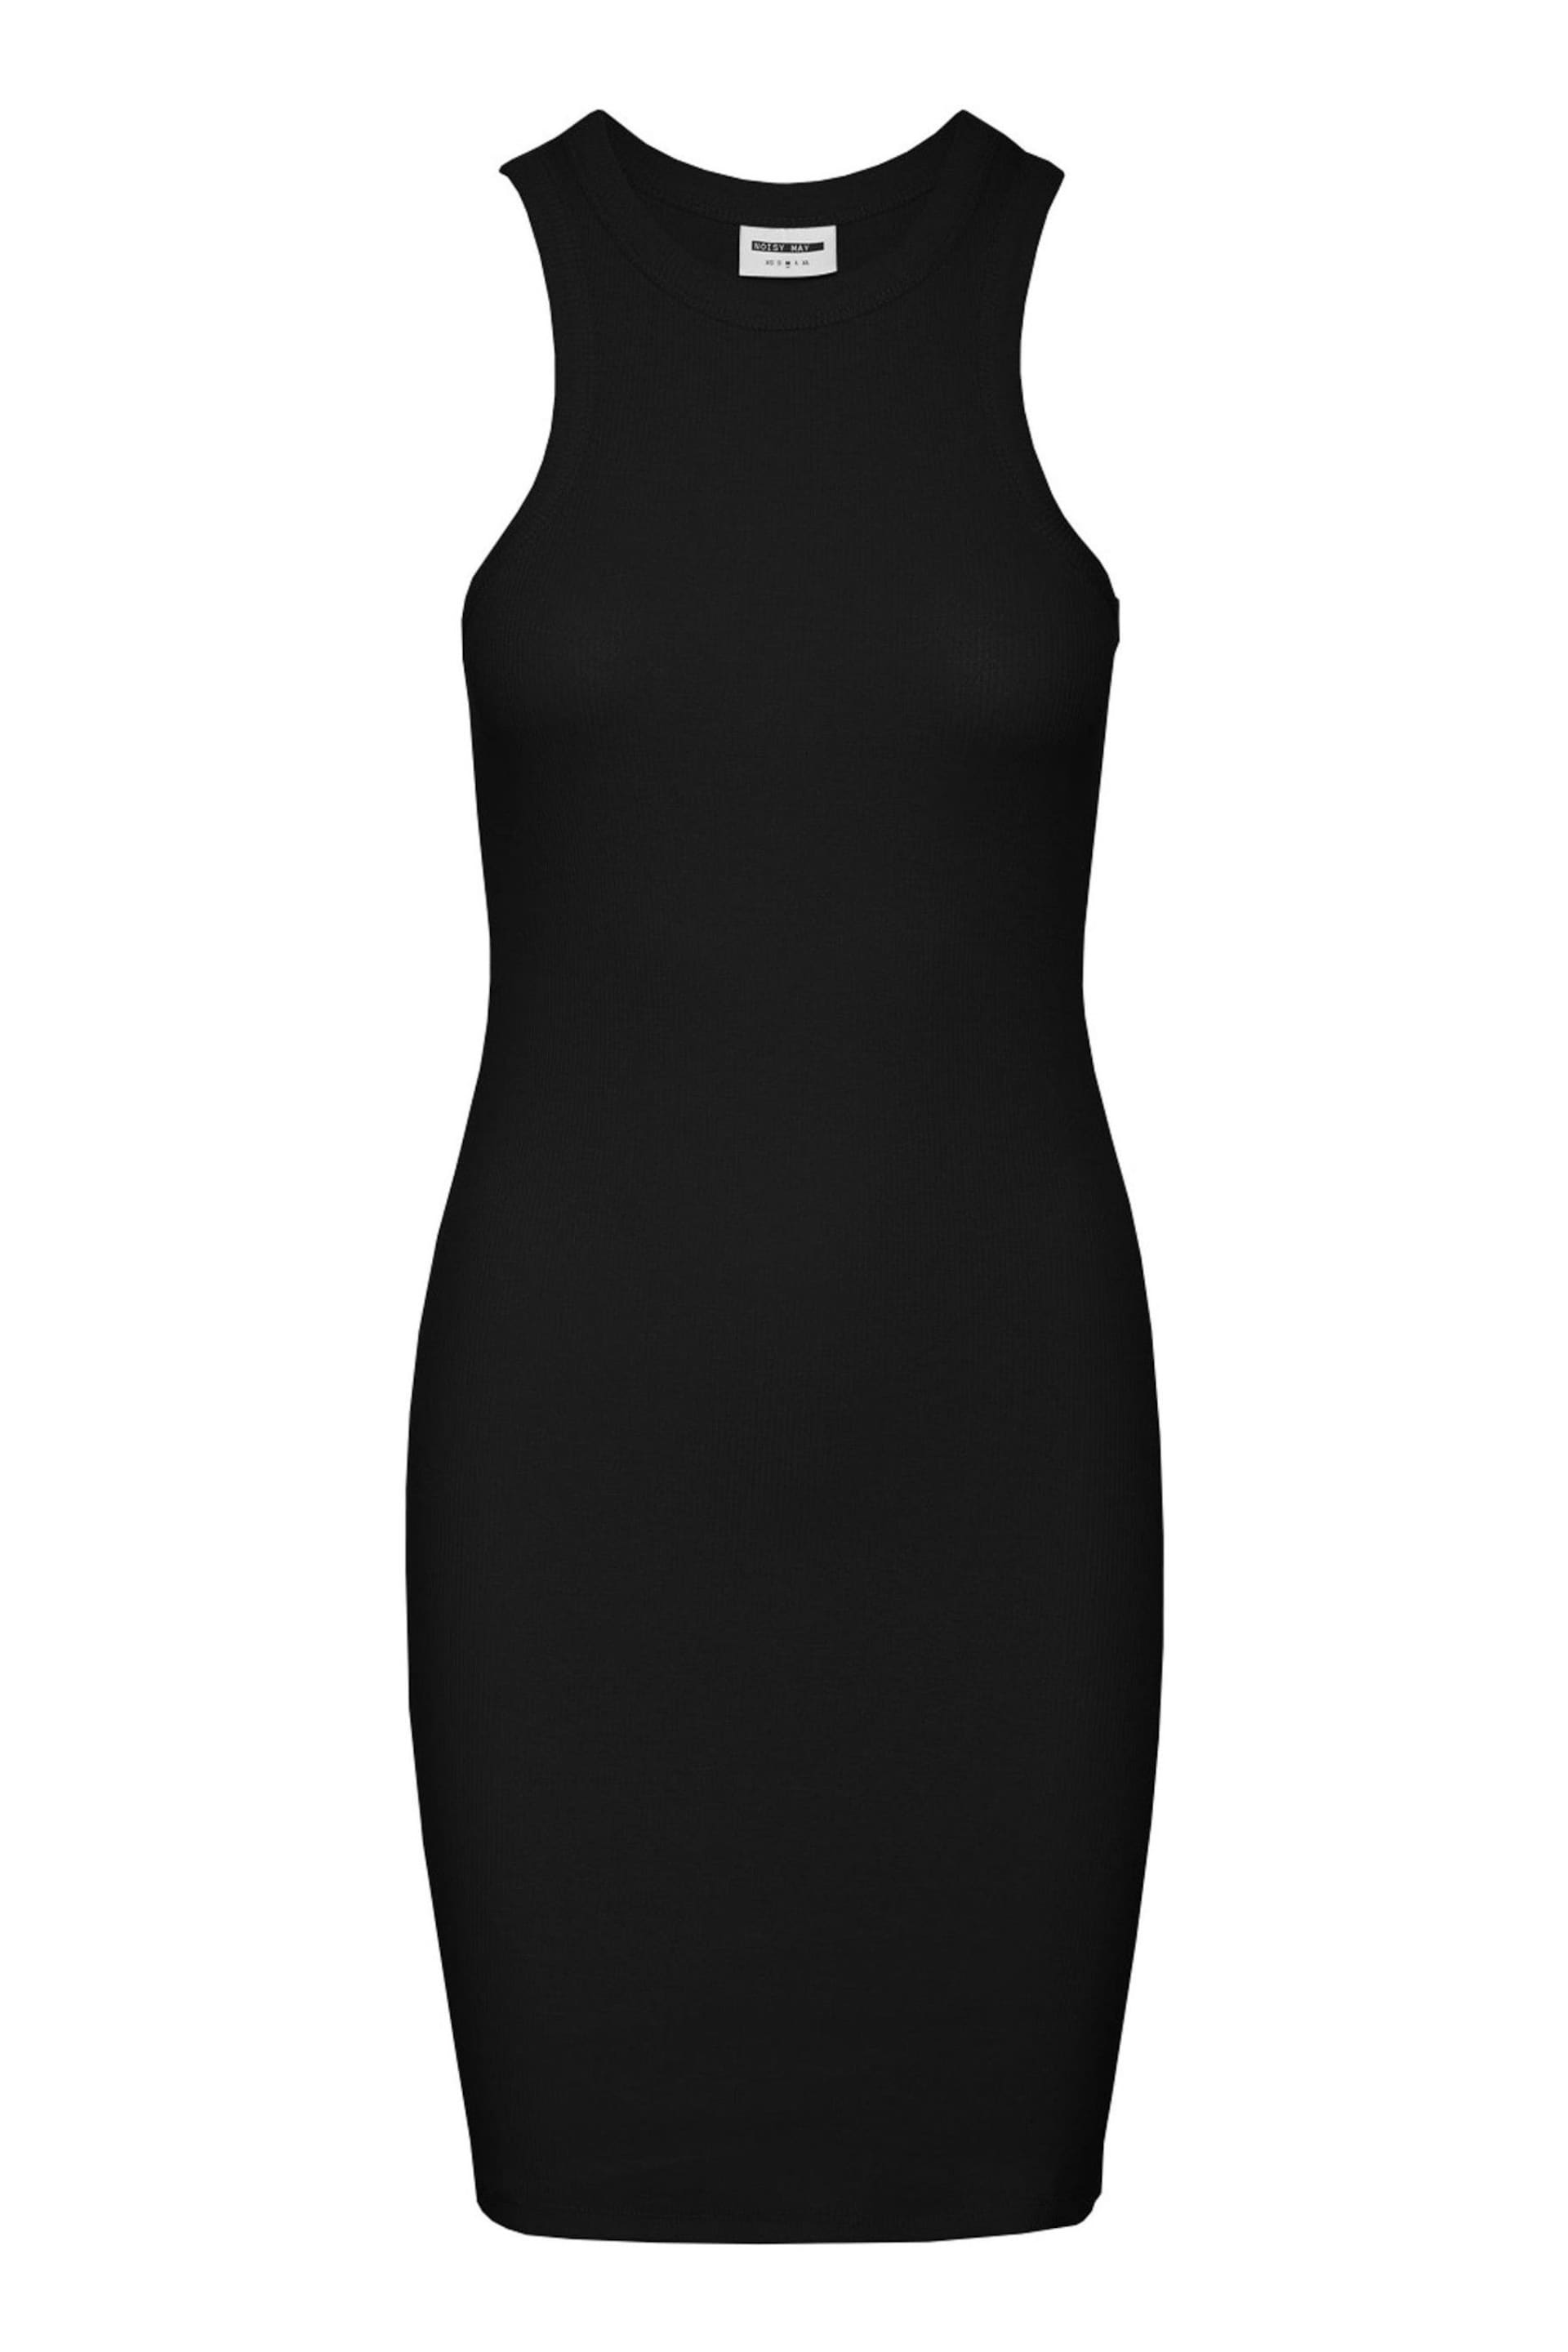 NOISY MAY Black Jersey Racer Neck Ribbed Dress - Image 5 of 5